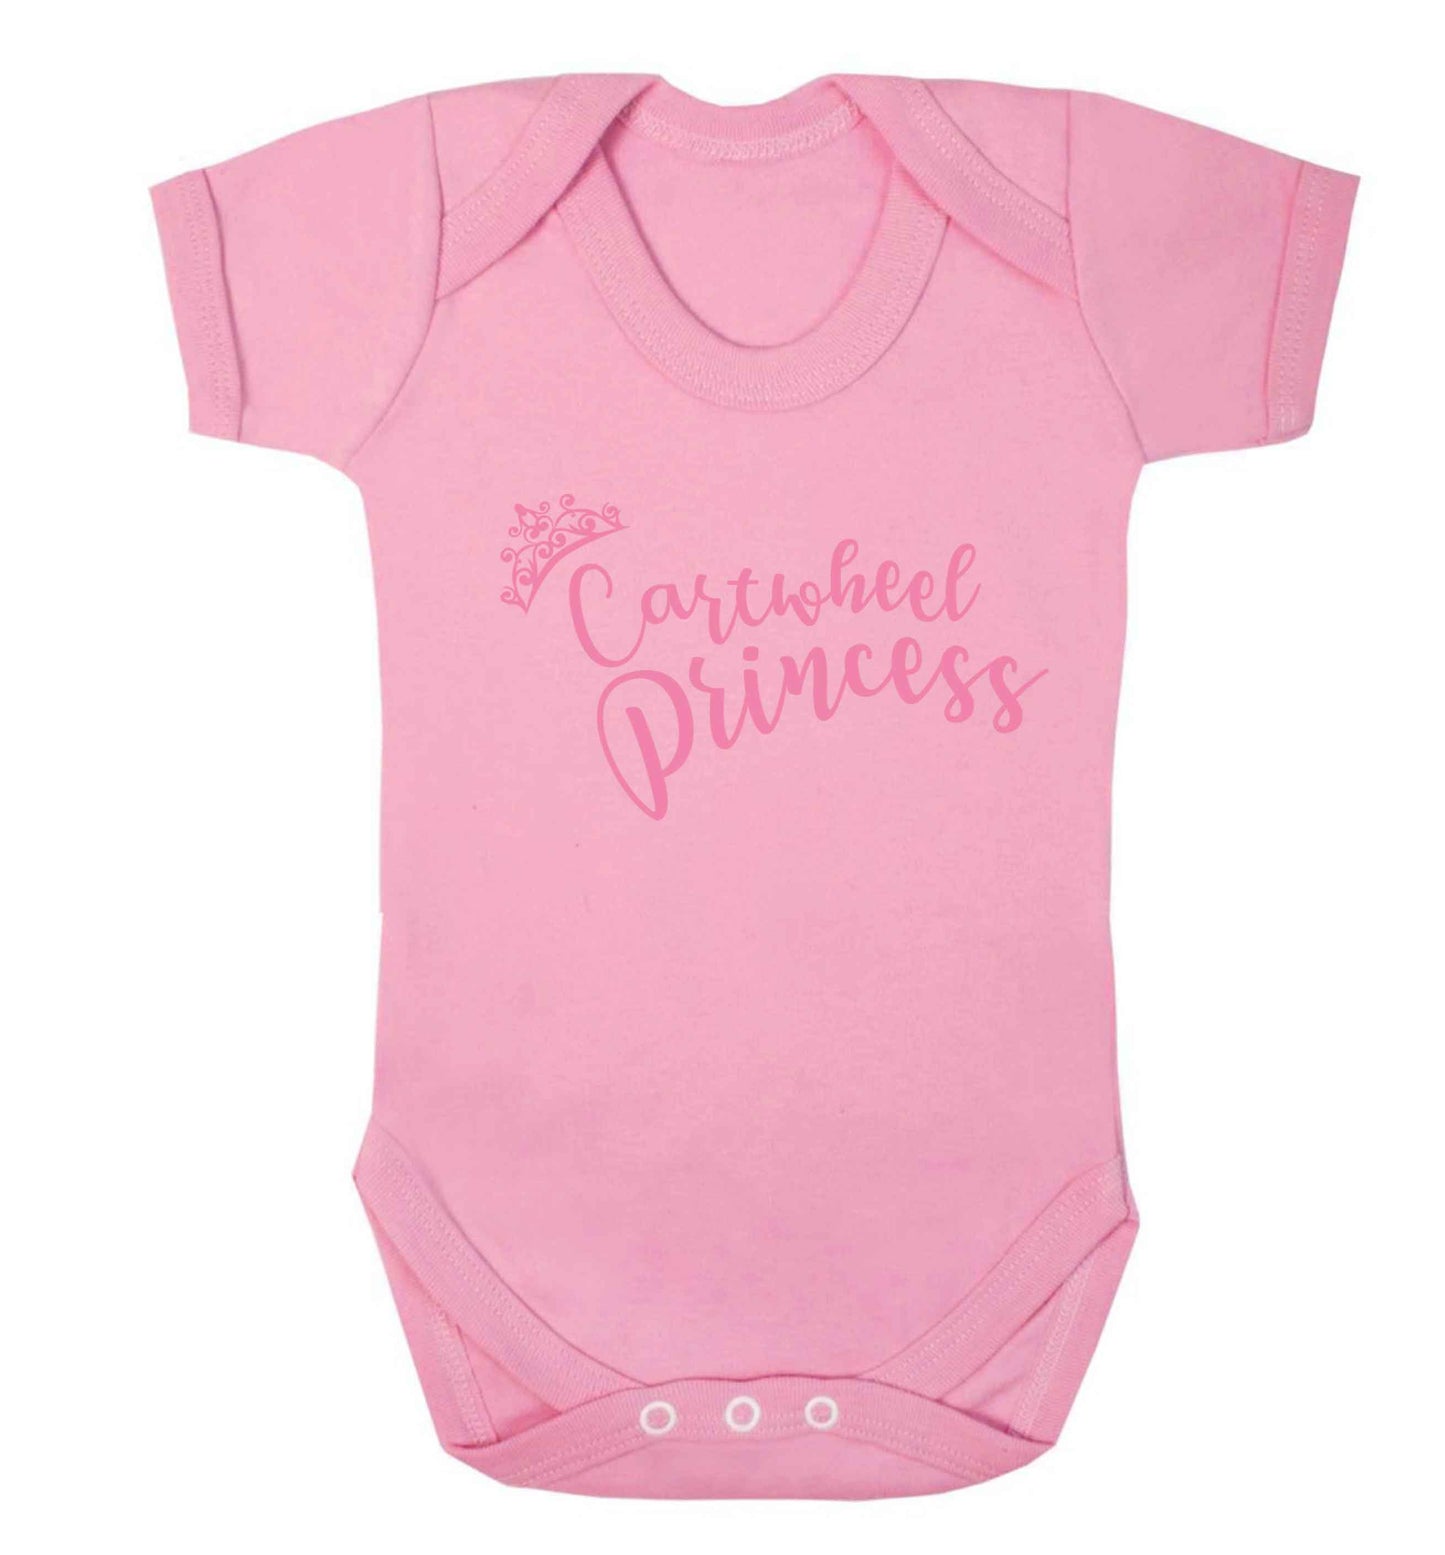 Cartwheel princess Baby Vest pale pink 18-24 months